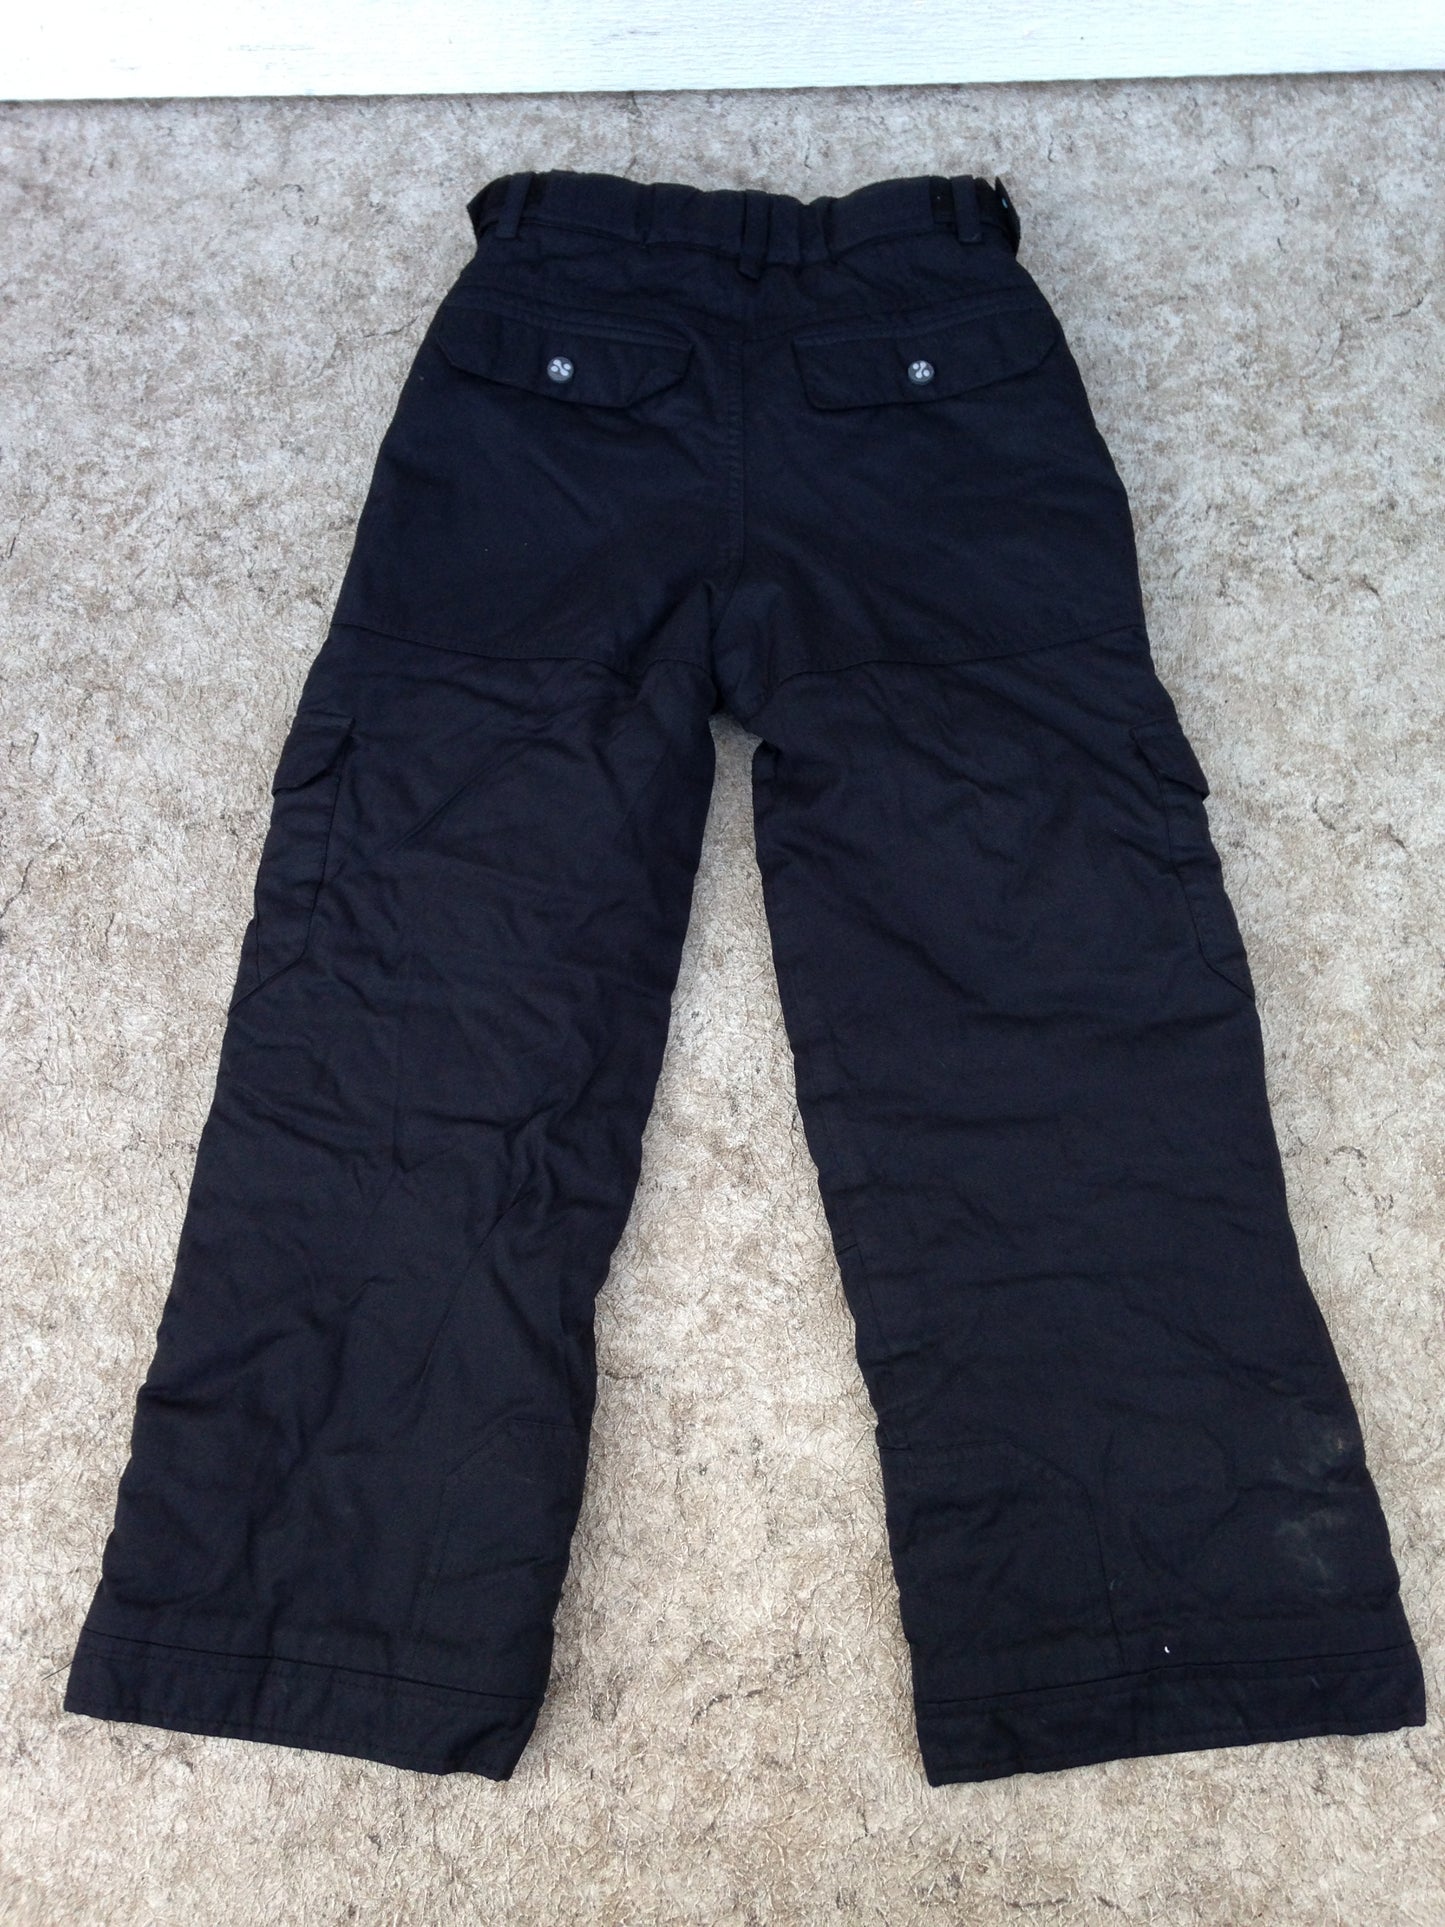 Snow Pants Child Size 10 Coltech Black With Adjustable Waist